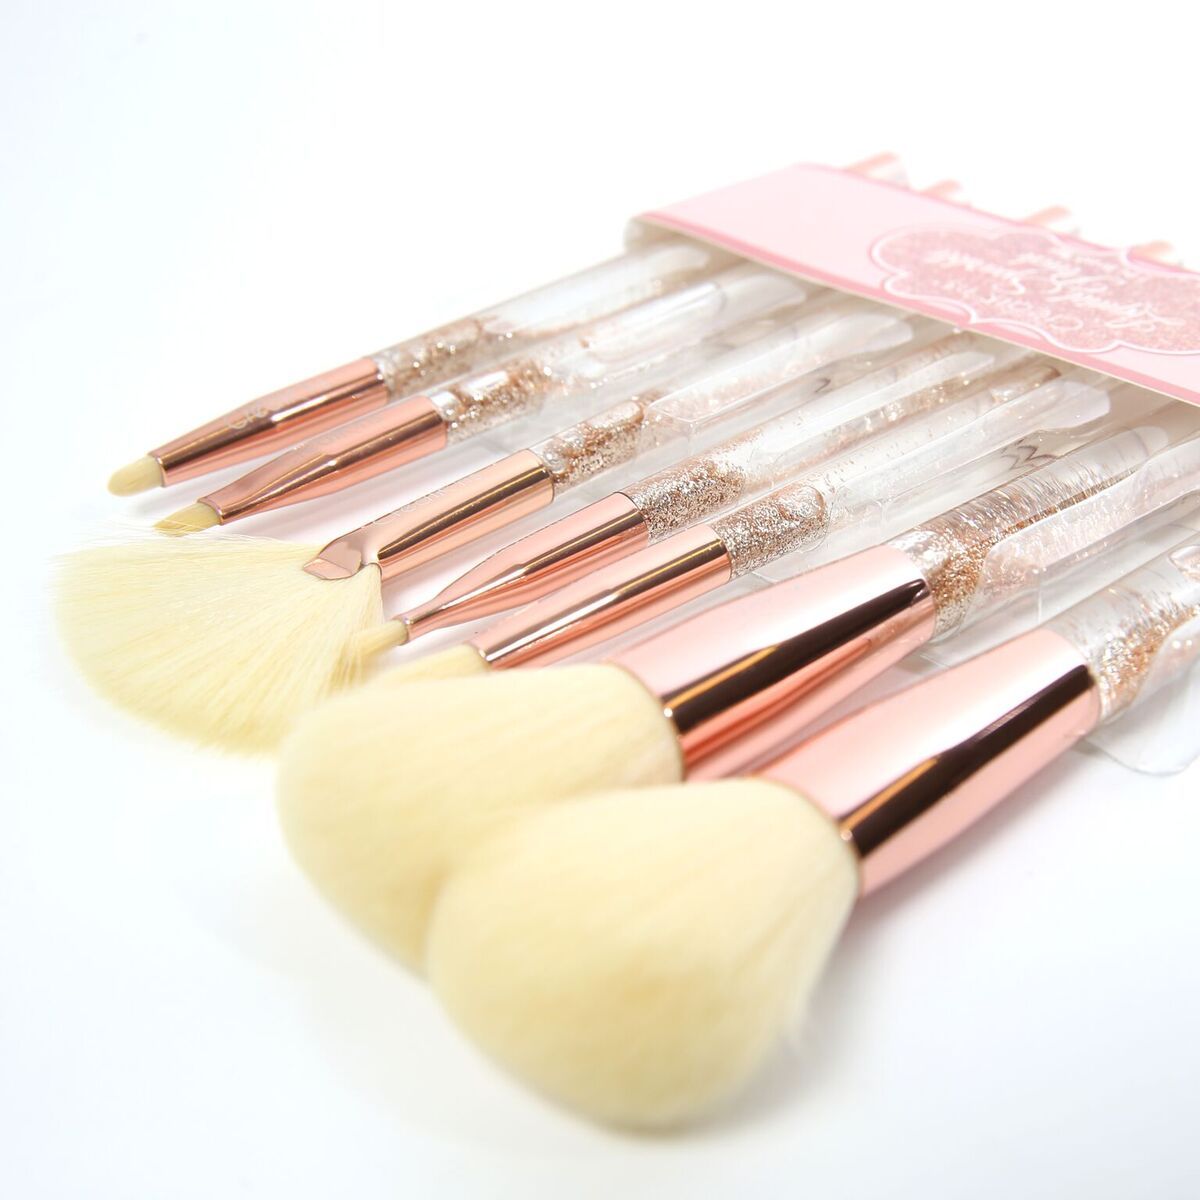 Beauty Creations - Peach Liquid Sparkle 7pc Brush Set